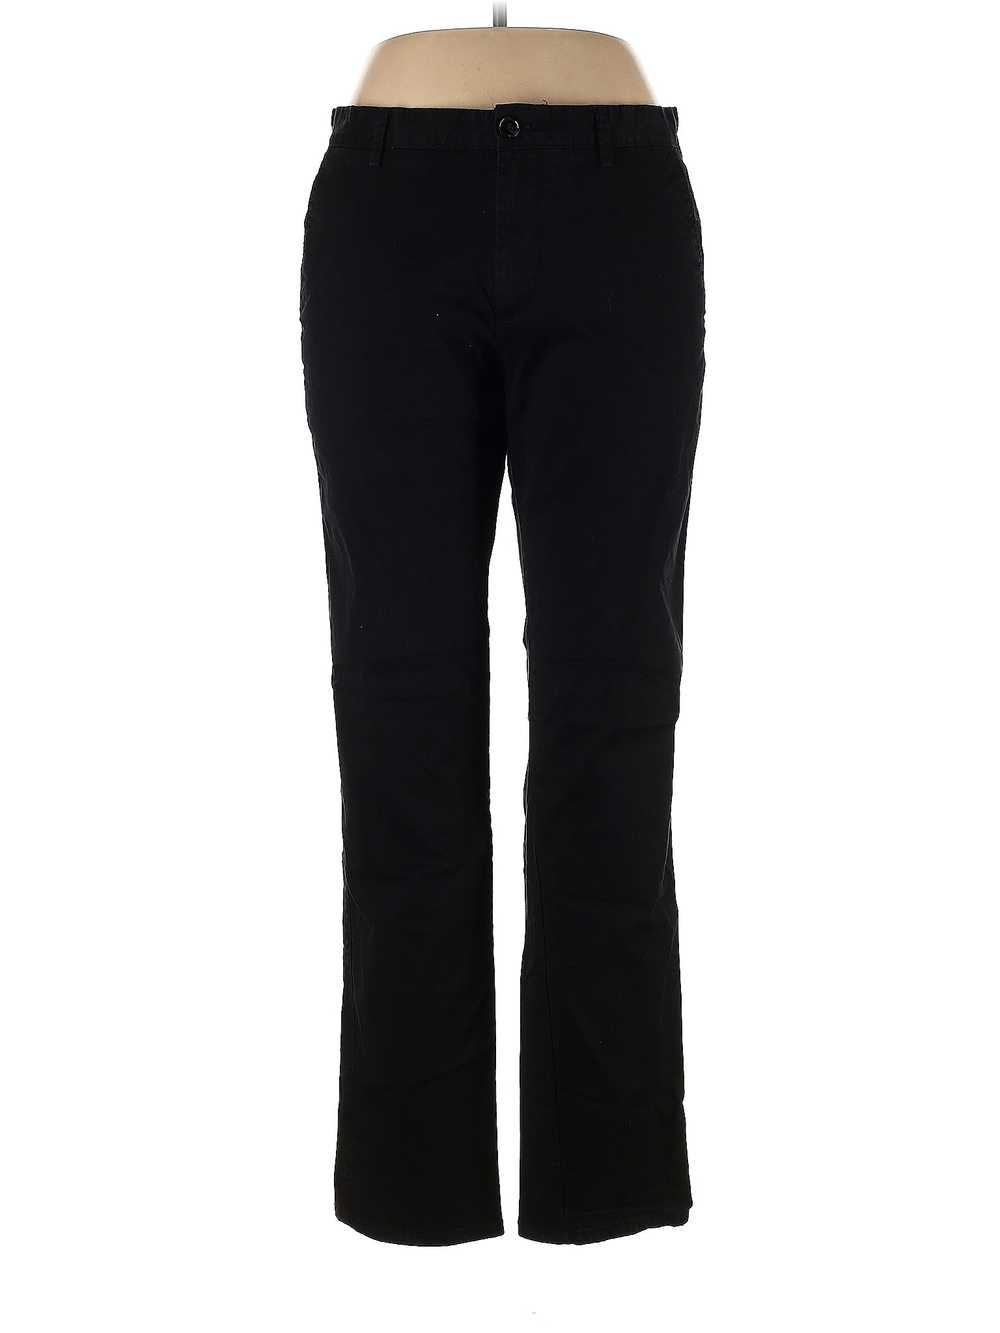 Calvin Klein Women Black Casual Pants 32W - image 1